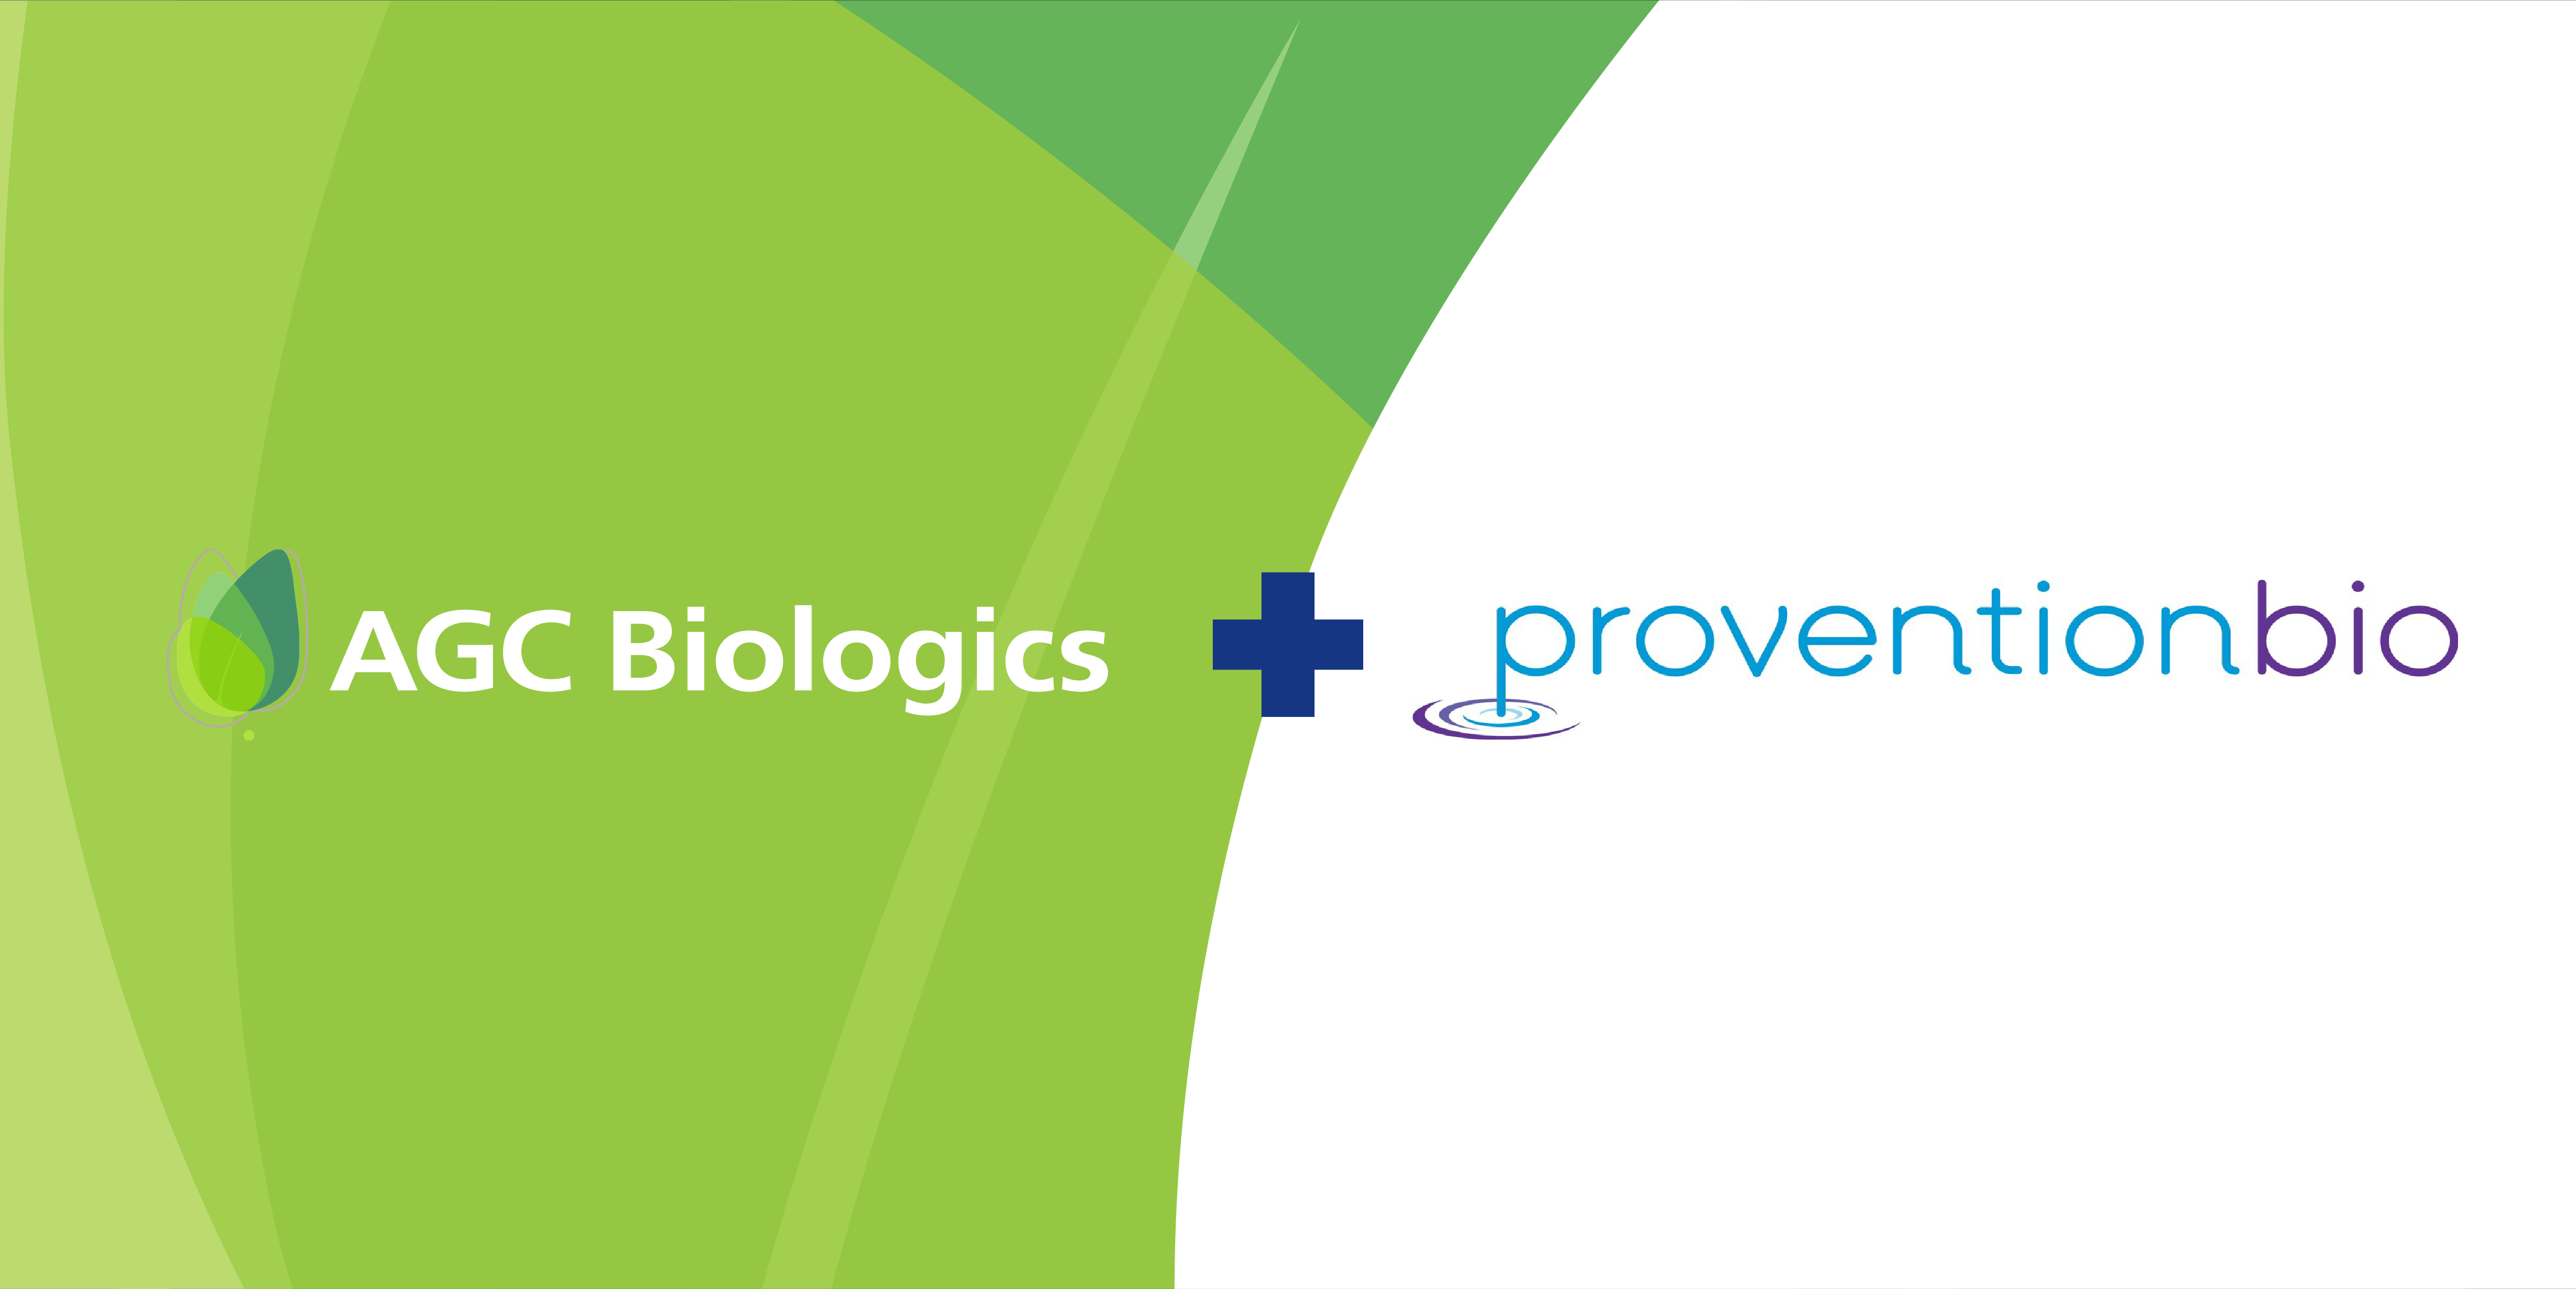 AGC Biologics and Provention Bio partner together.